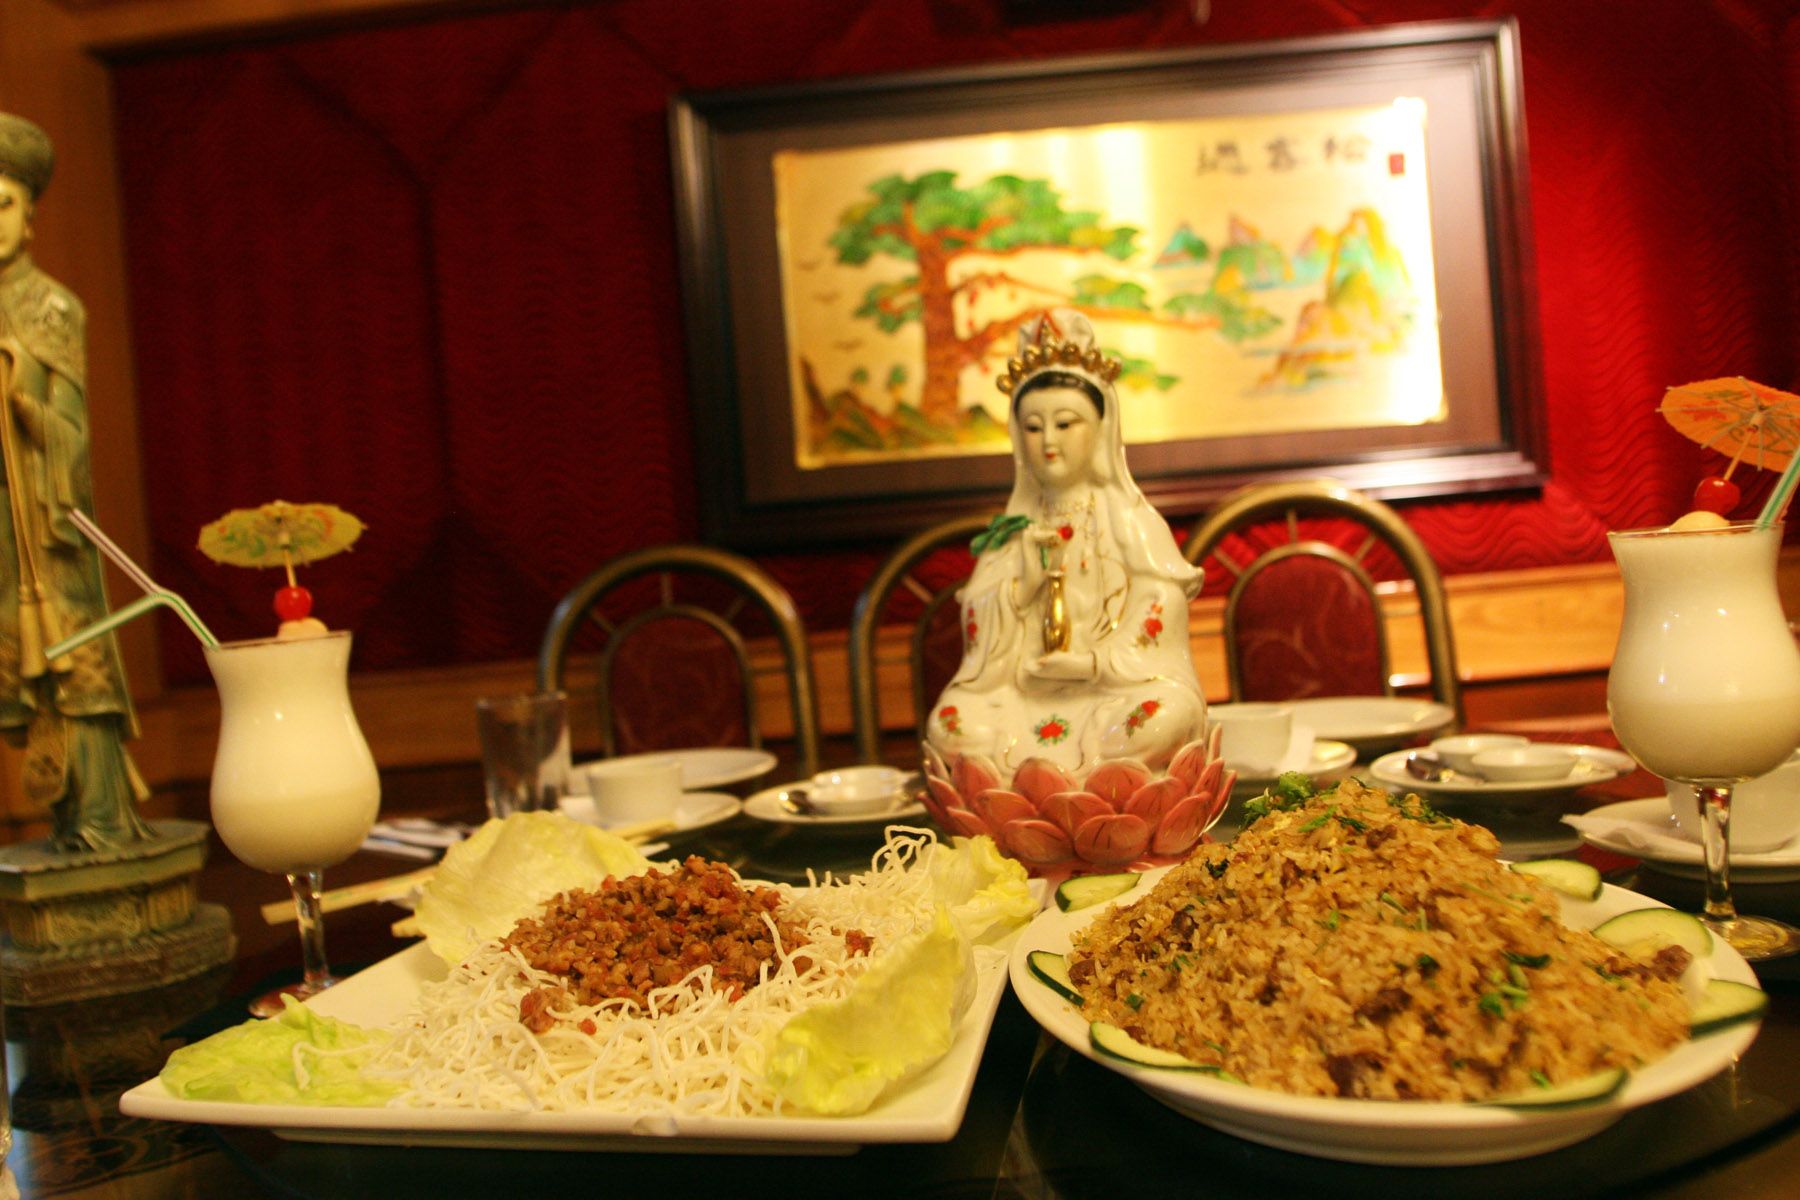 Platos de comida fusión peruano-china. Foto: ANDINA/Carolina Urra.